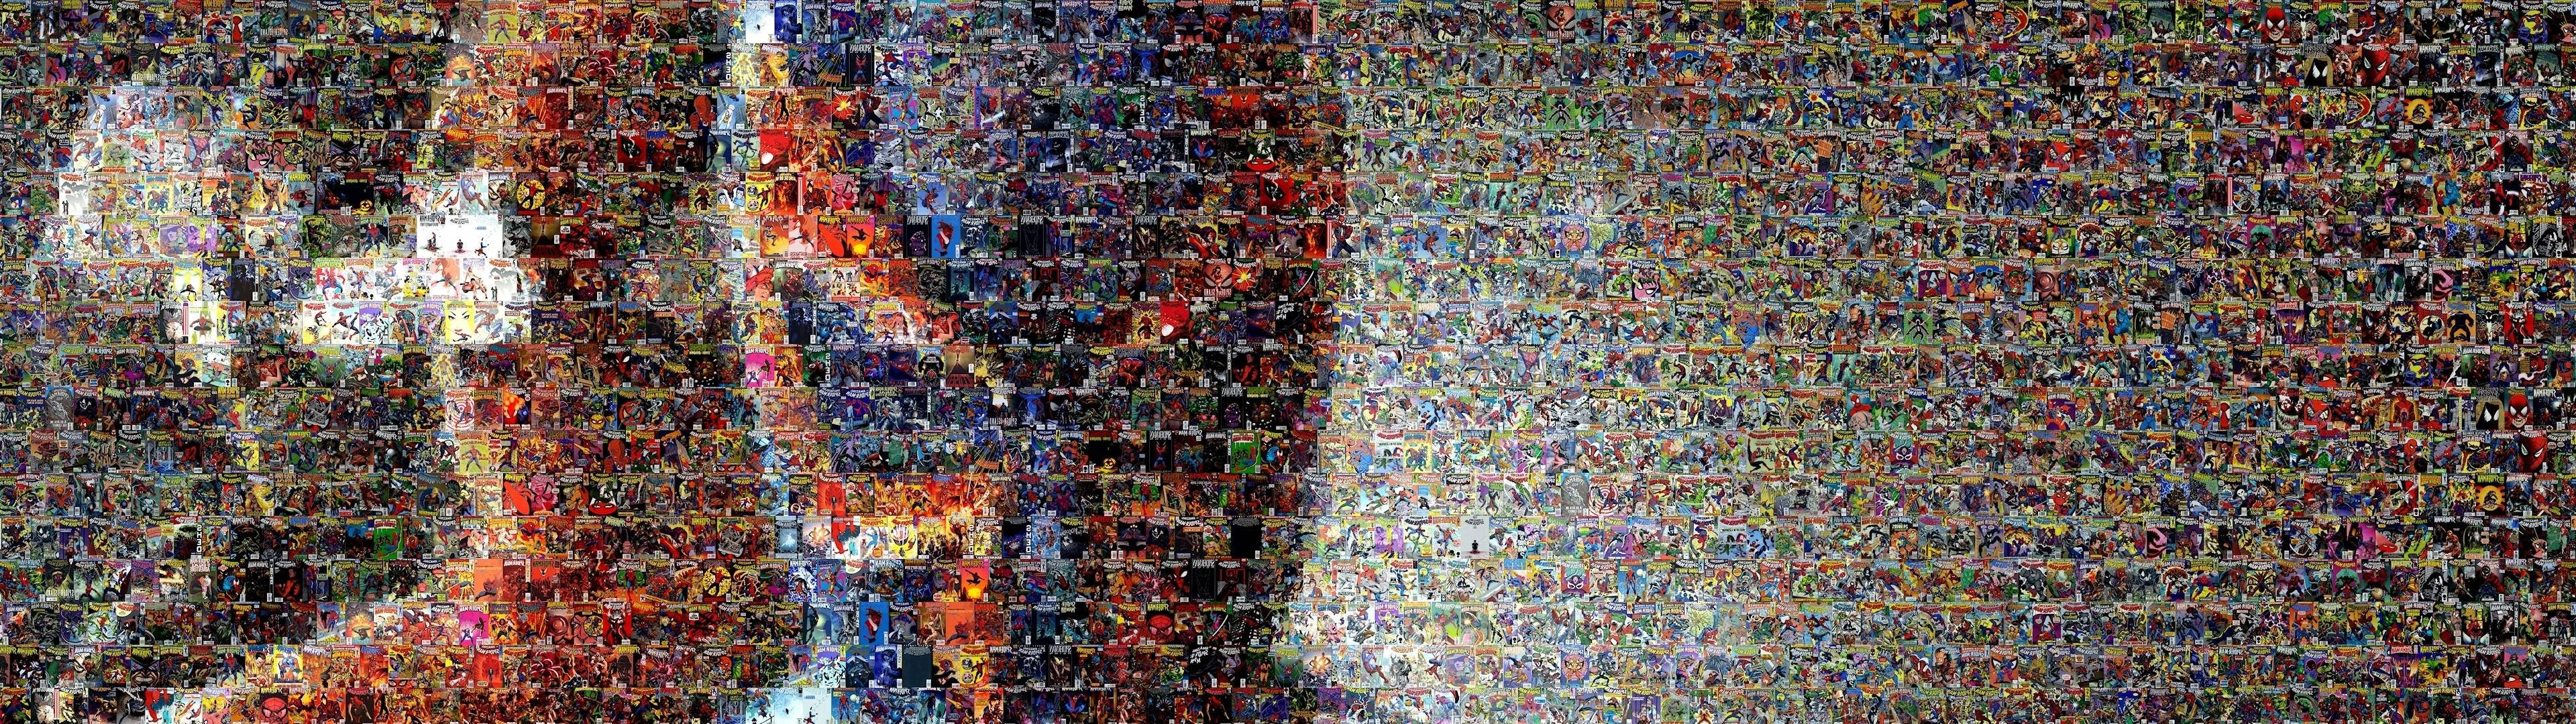 Glitch Mosaic Of Superheroes Wallpaper